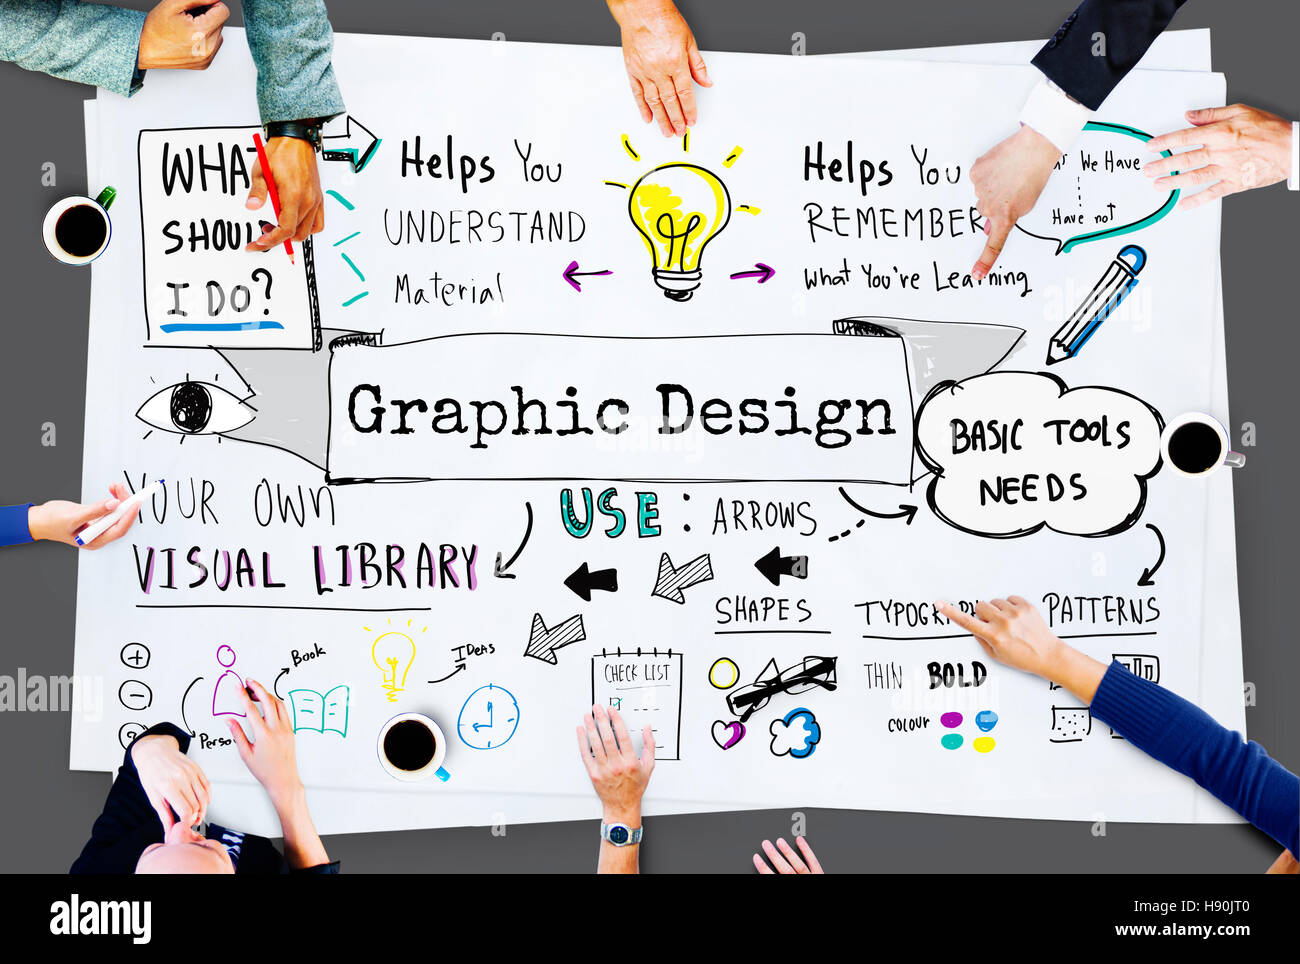 innovative graphic design ideas